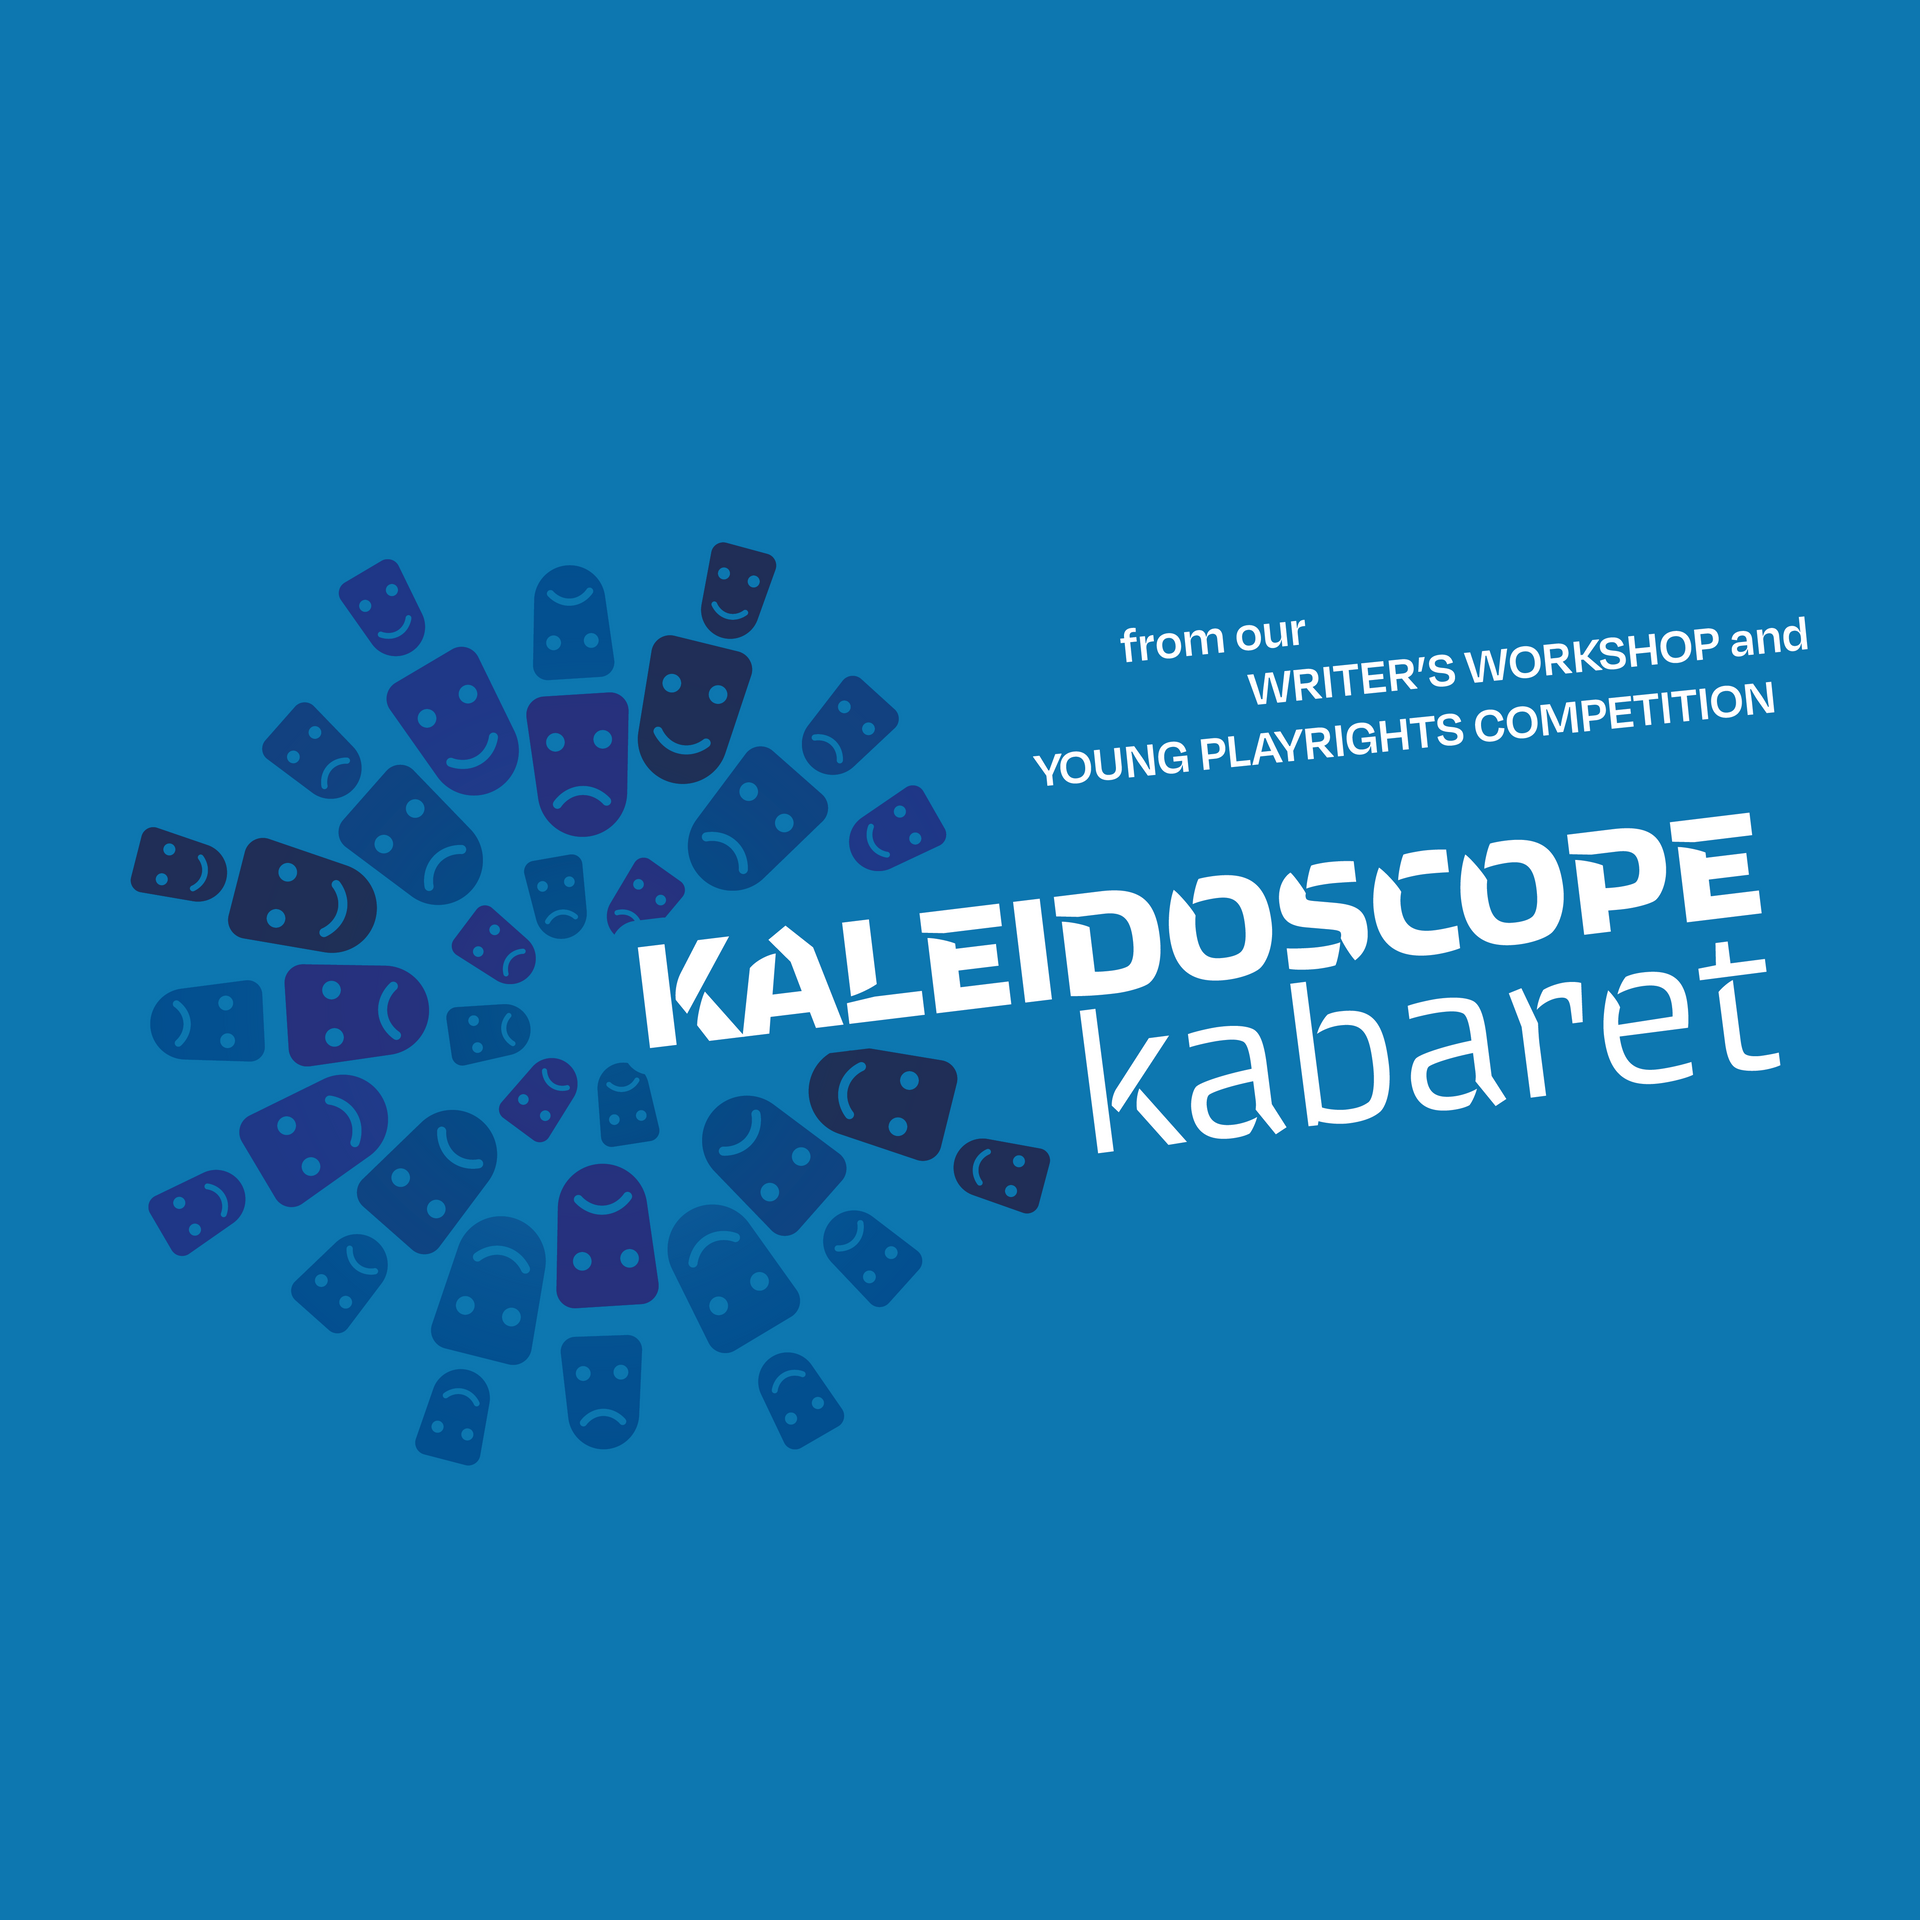 A kaleidoscope kabaret